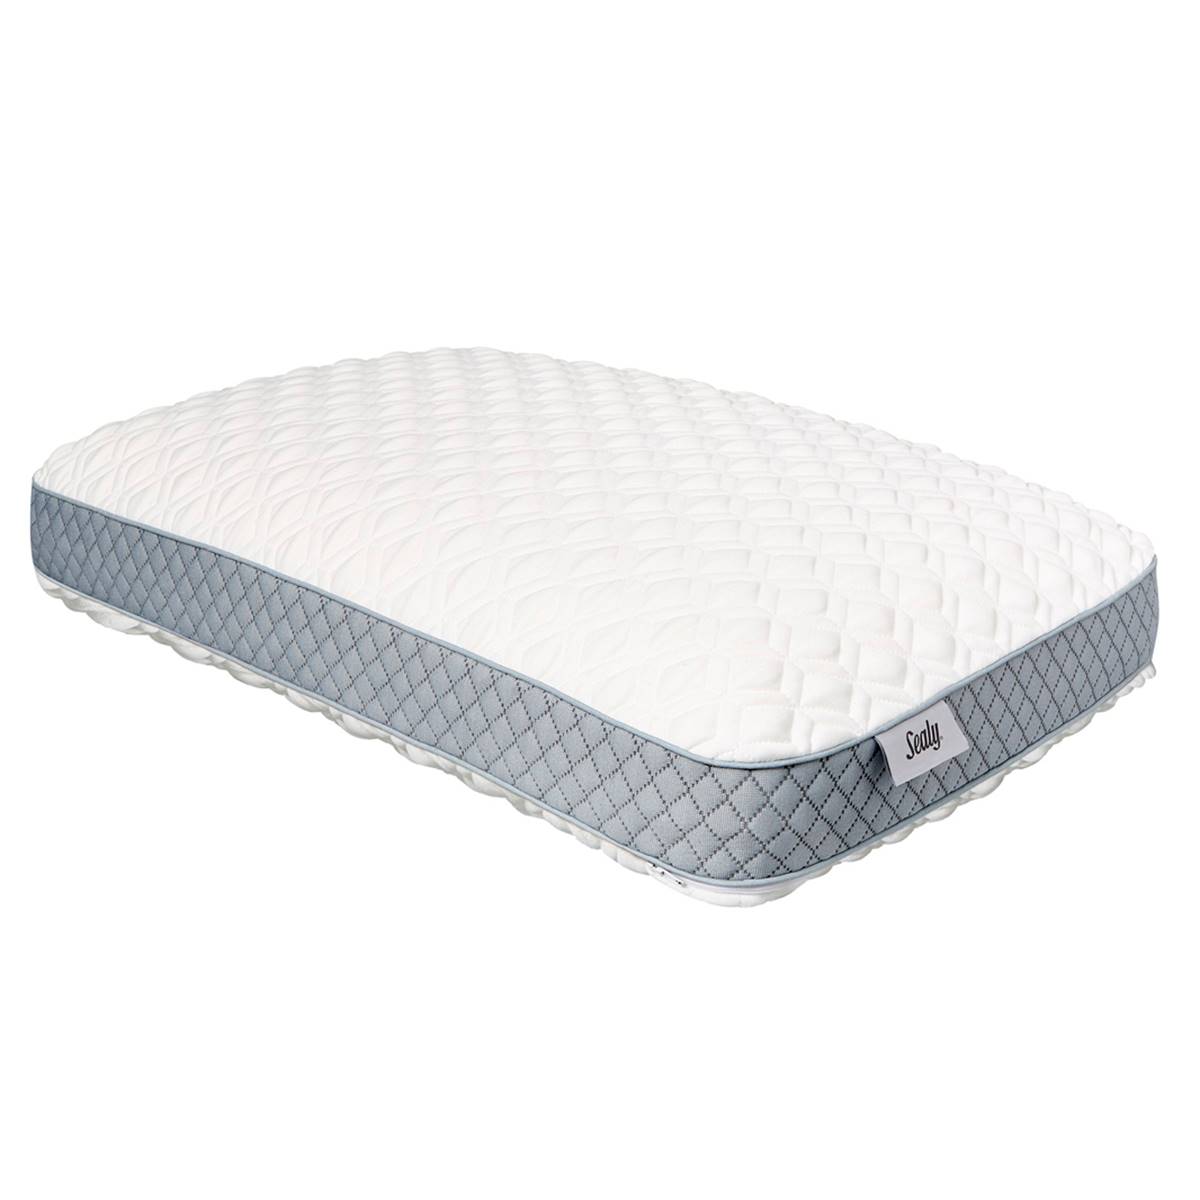 Sealy(R) Memory Foam Gusset Pillow